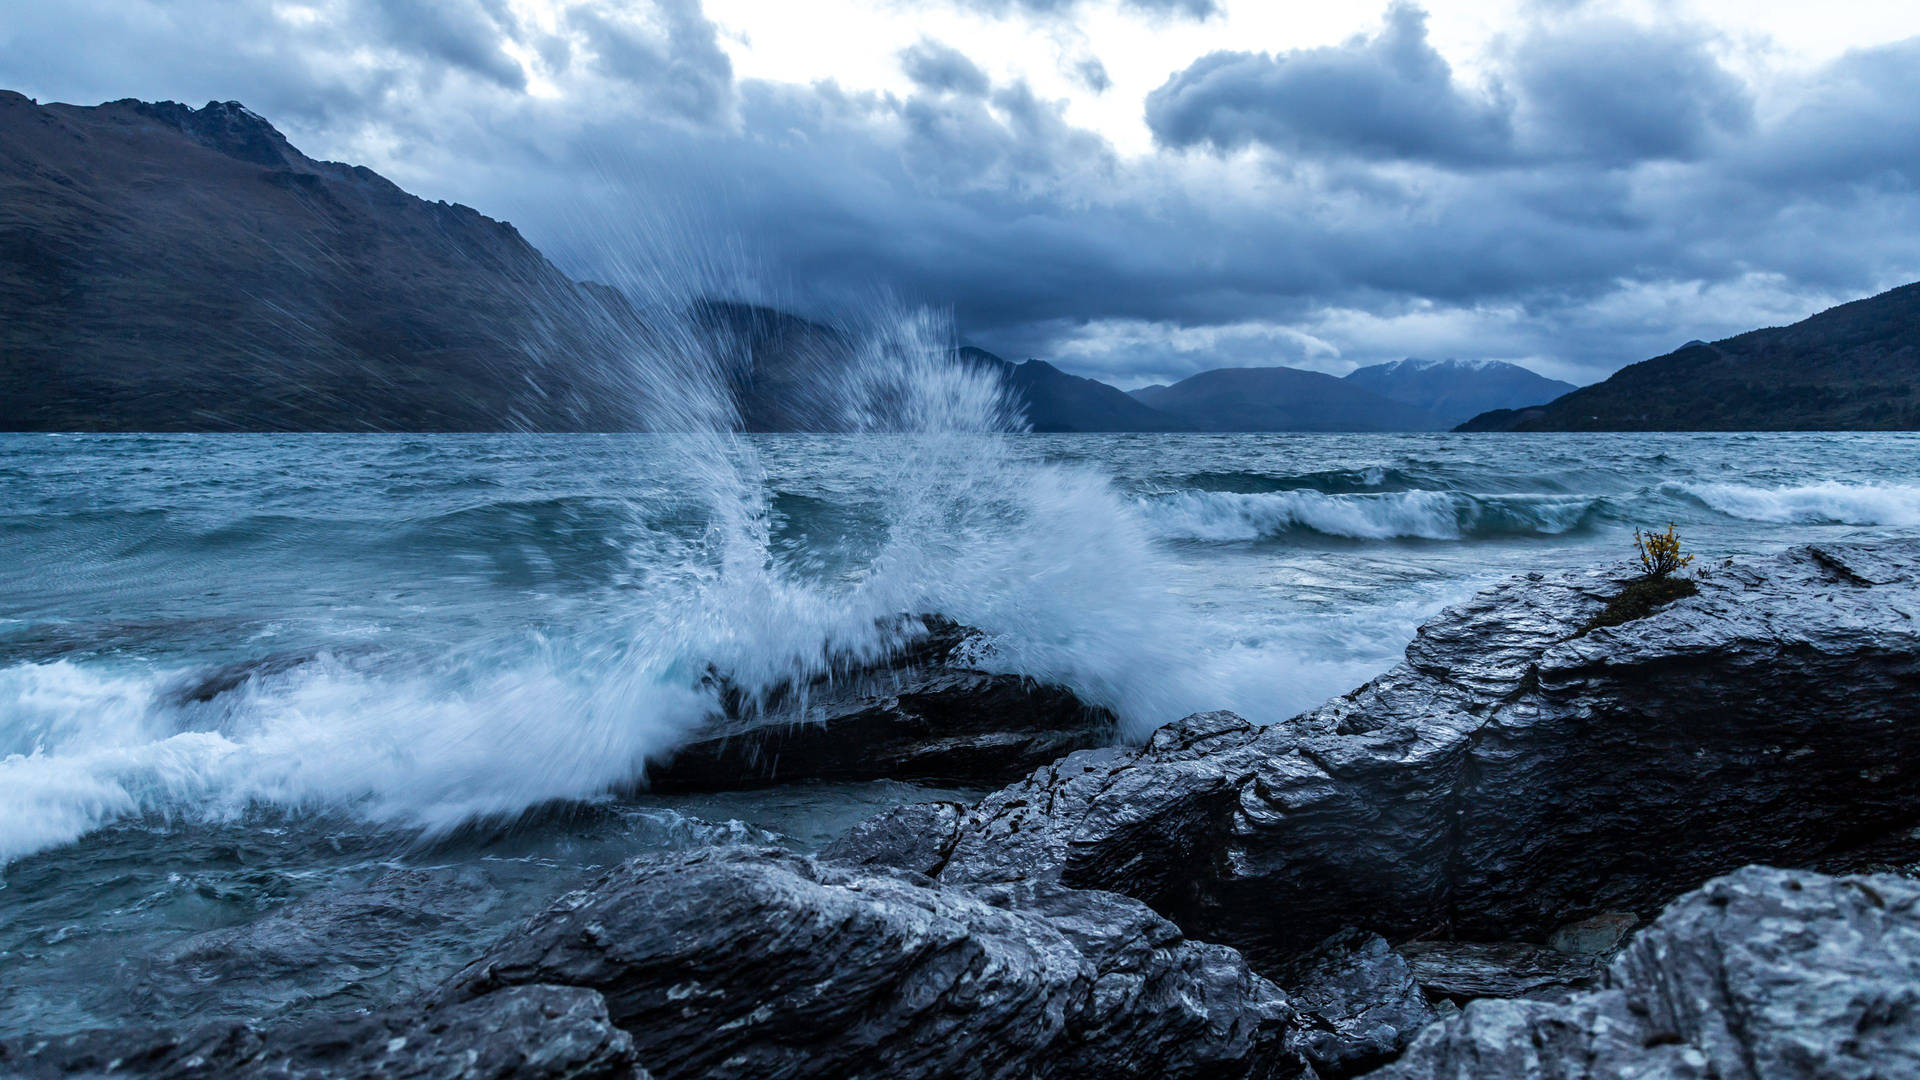 Aesthetic Fury Of Ocean Waves Crashing Over Rocky Coastline Background